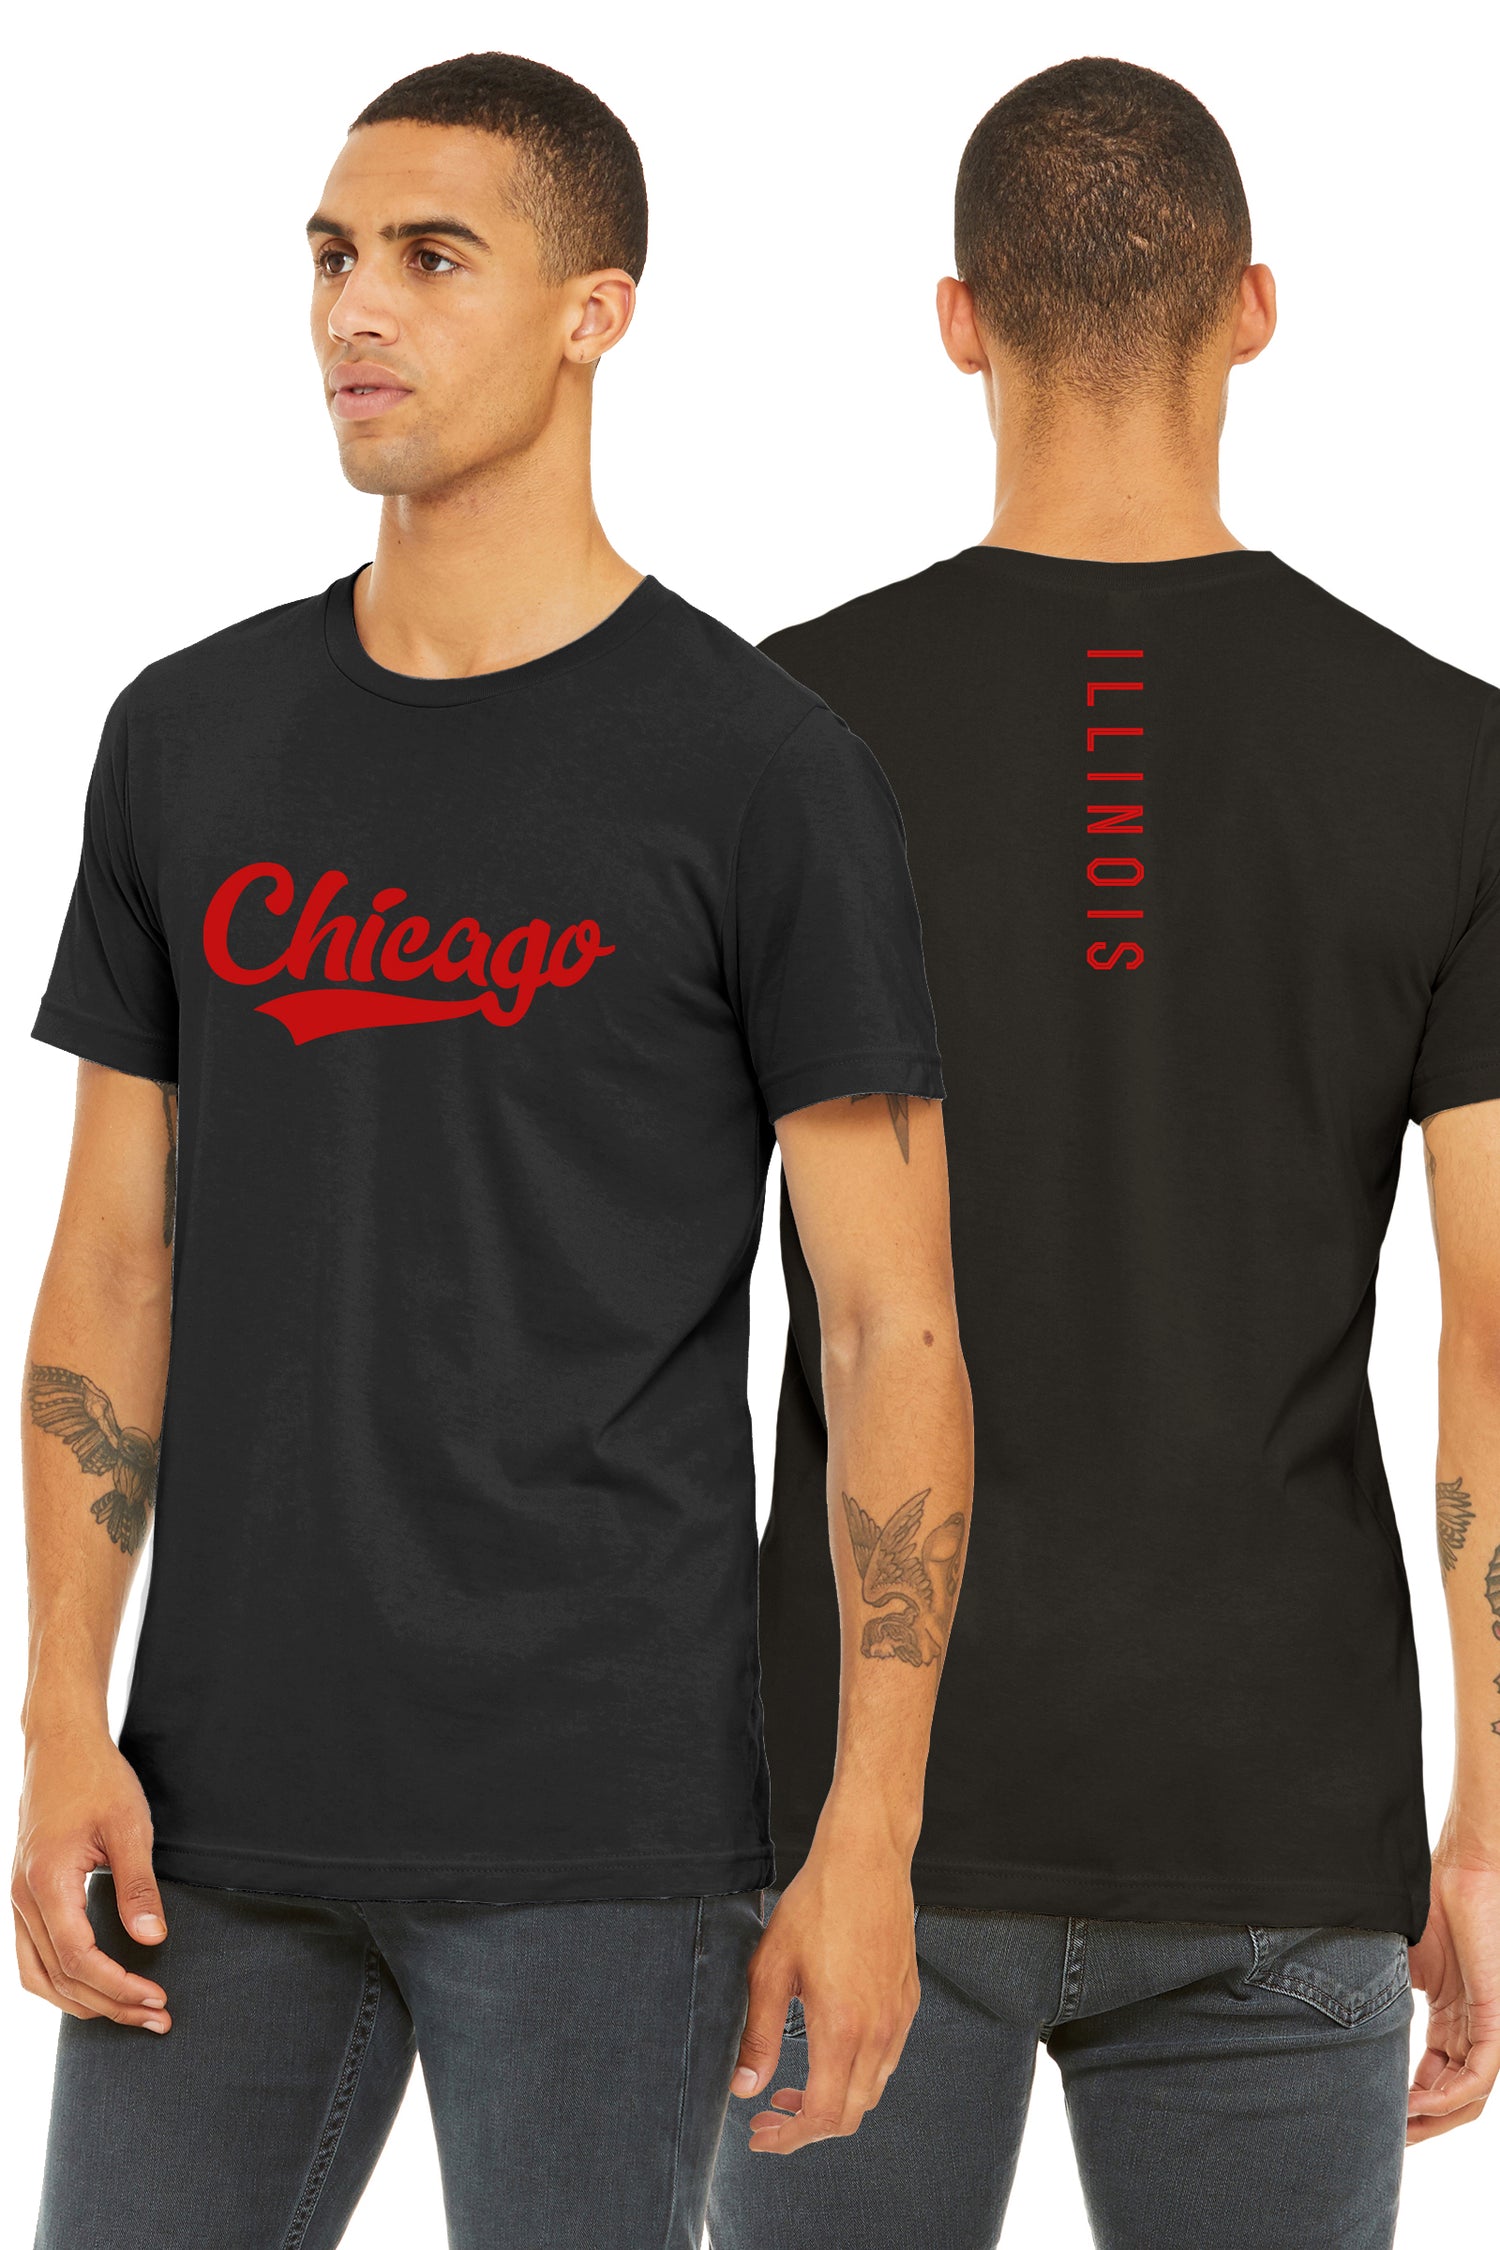 Chicago Clothing